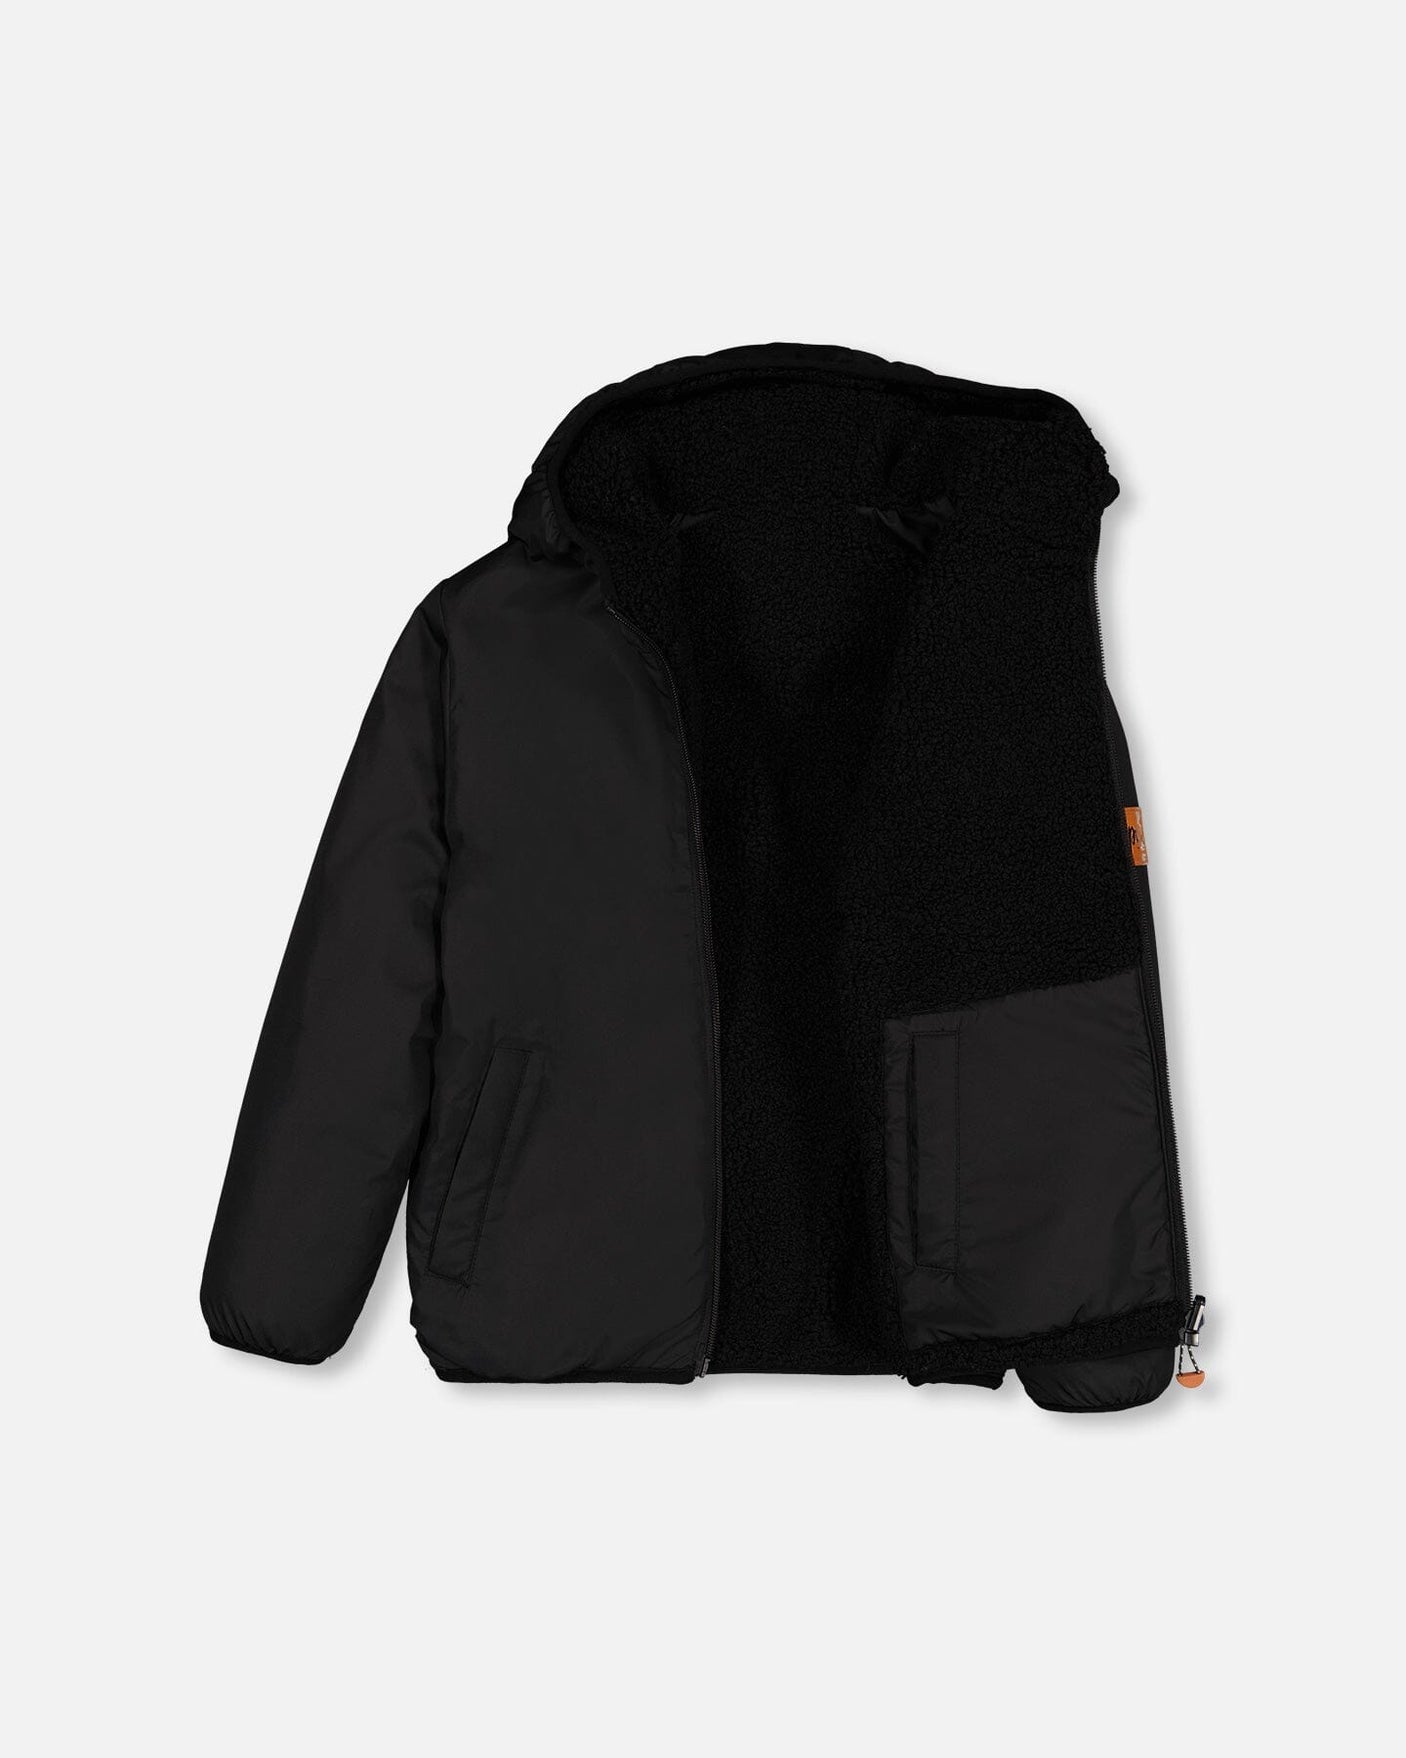 Transition Reversible Sherpa And Nylon Jacket Black-4